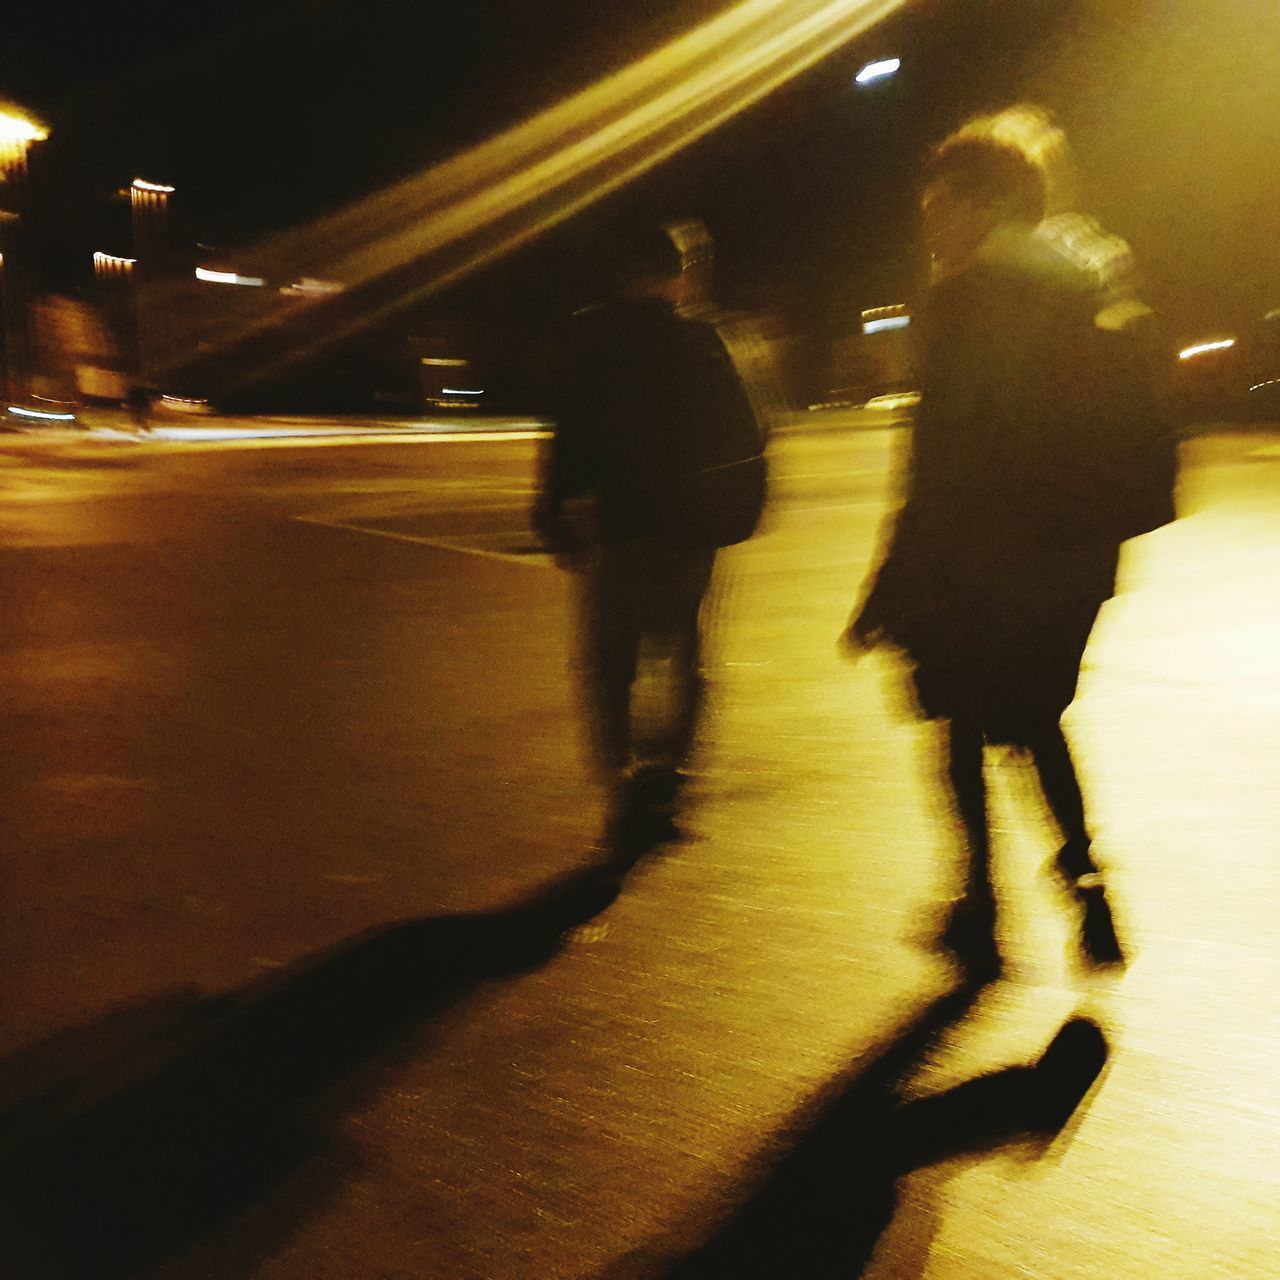 BLURRED PEOPLE WALKING ON ILLUMINATED STREET AT NIGHT